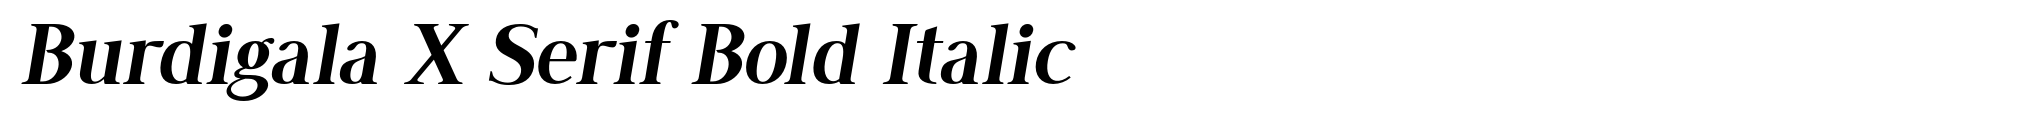 Burdigala X Serif Bold Italic image